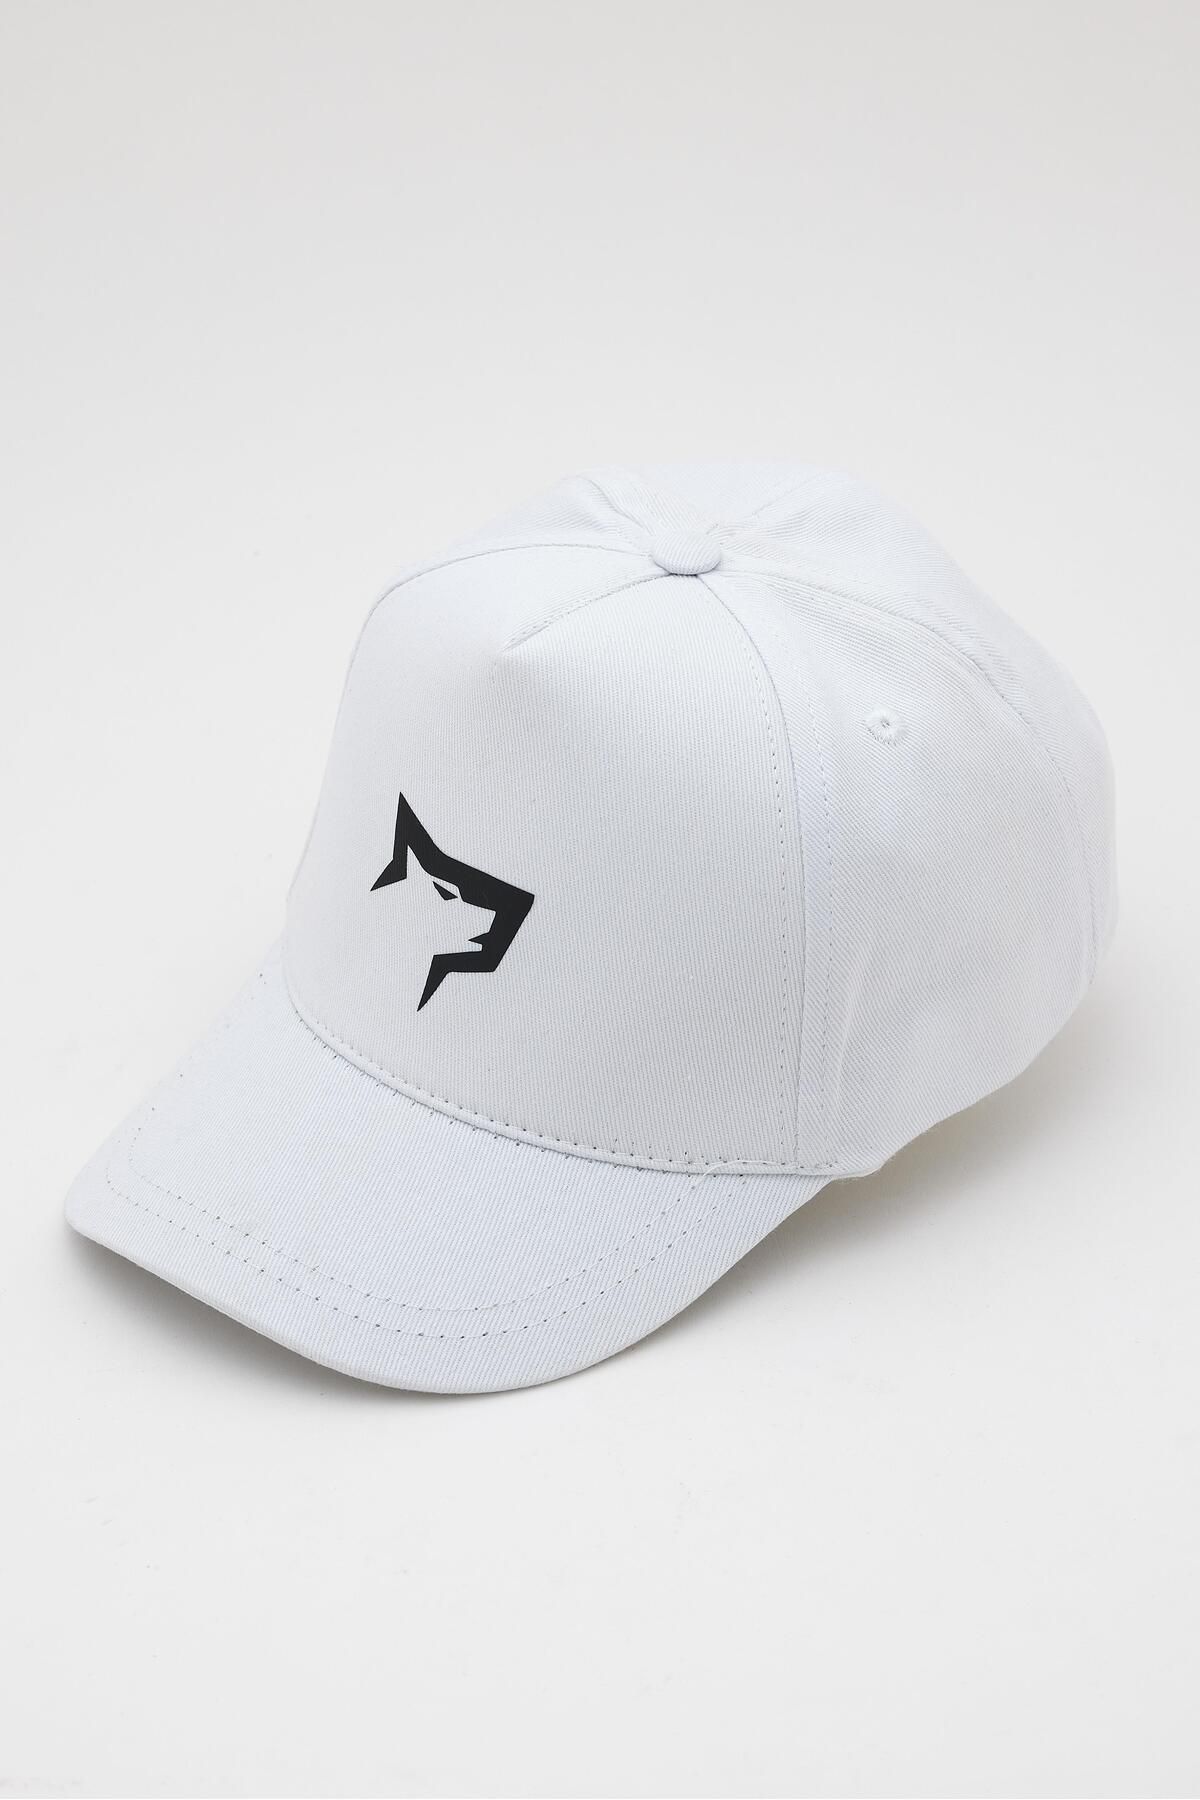 Gymwolves Spor Şapka | Unisex | Sports Hat | Beyaz Renk |